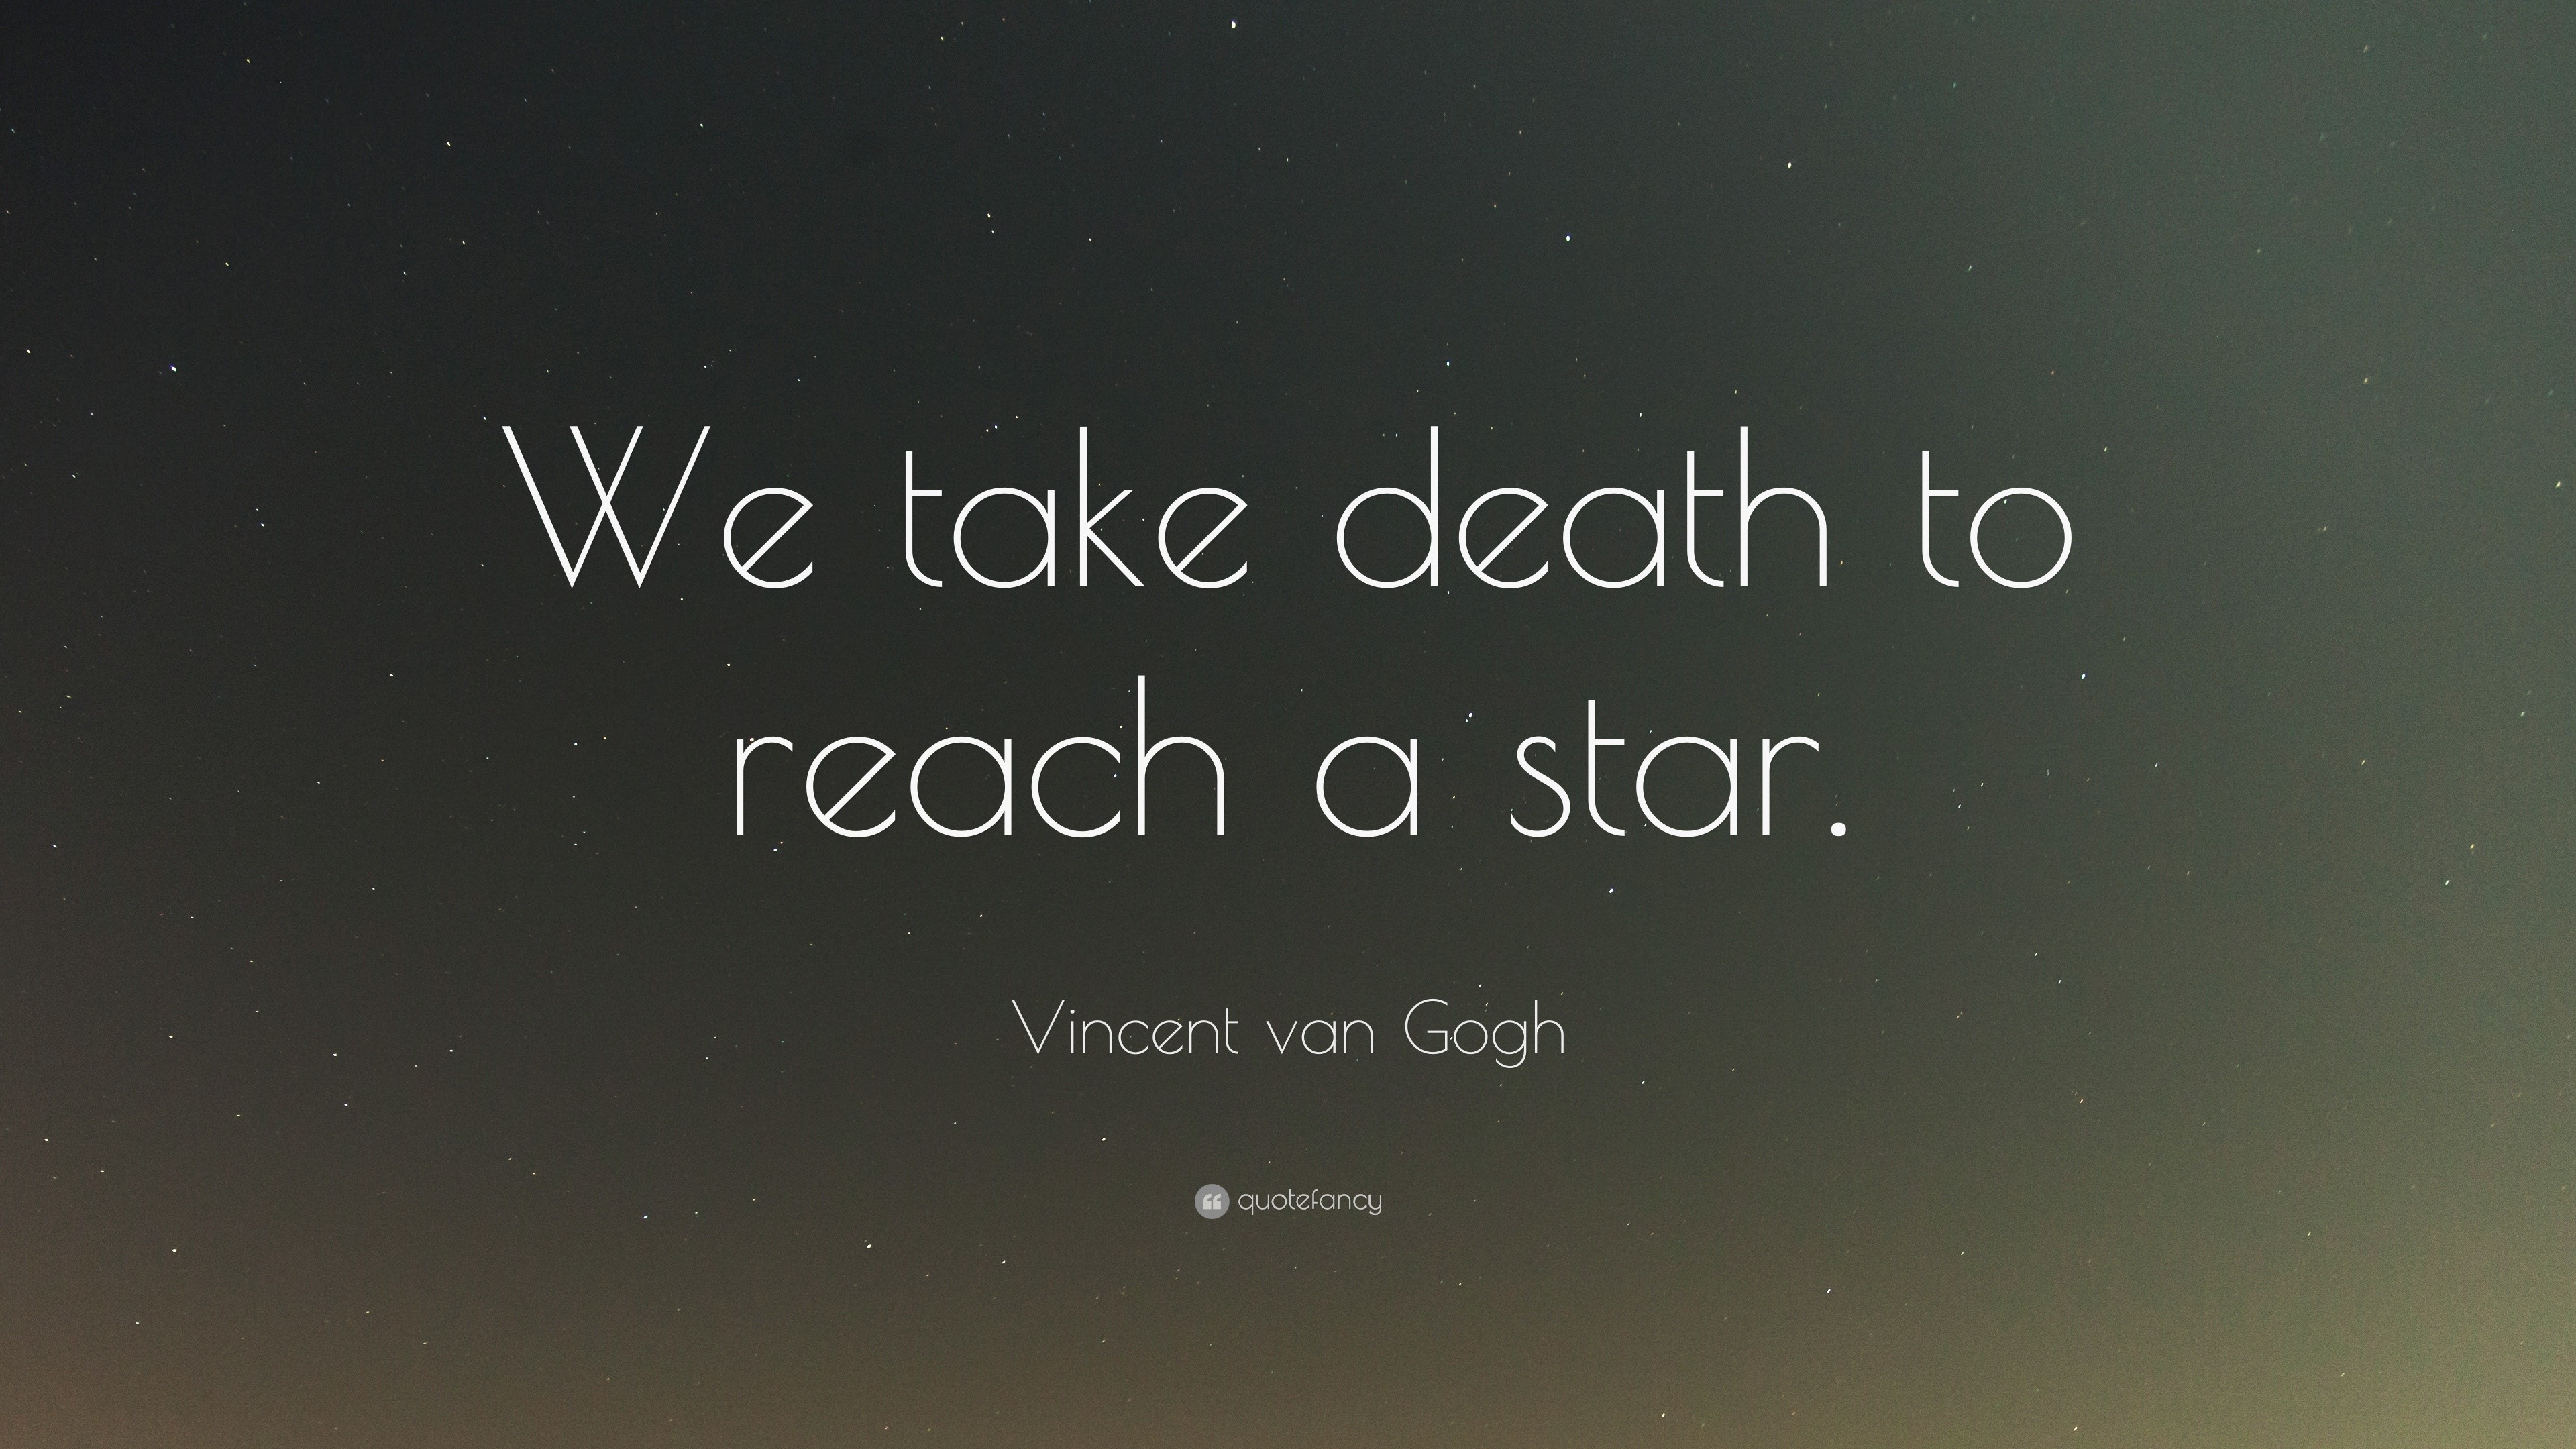 Super Vincent van Gogh Quote: “We take death to reach a star.” (12 NJ-56